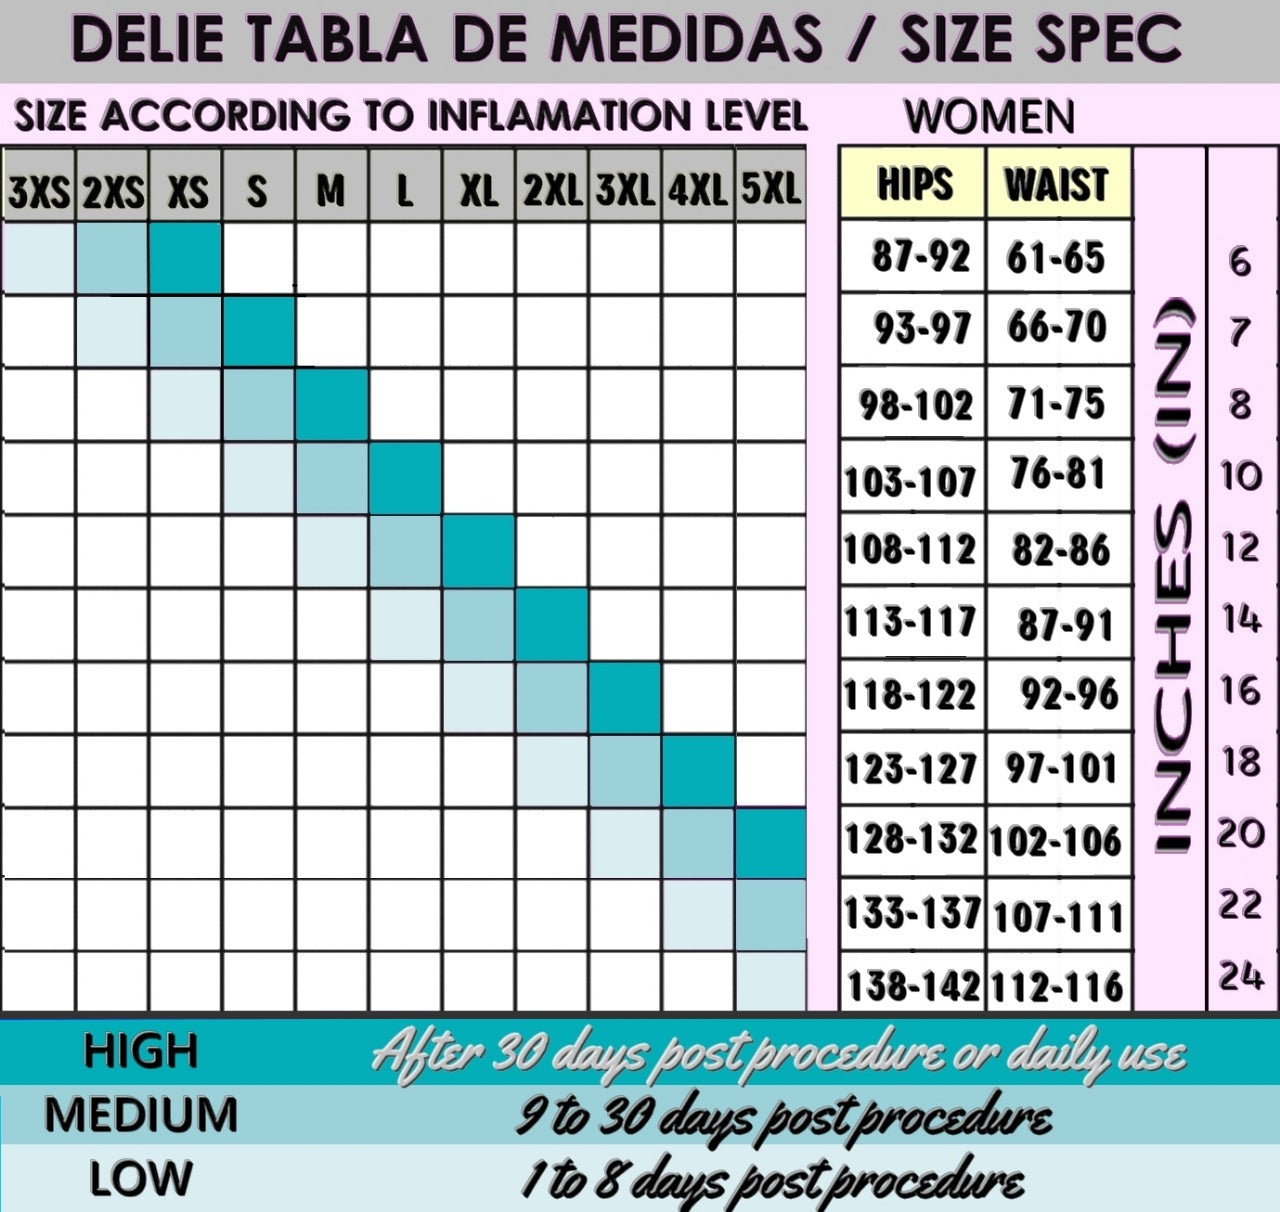 delie-chart-size-tabla-medidas